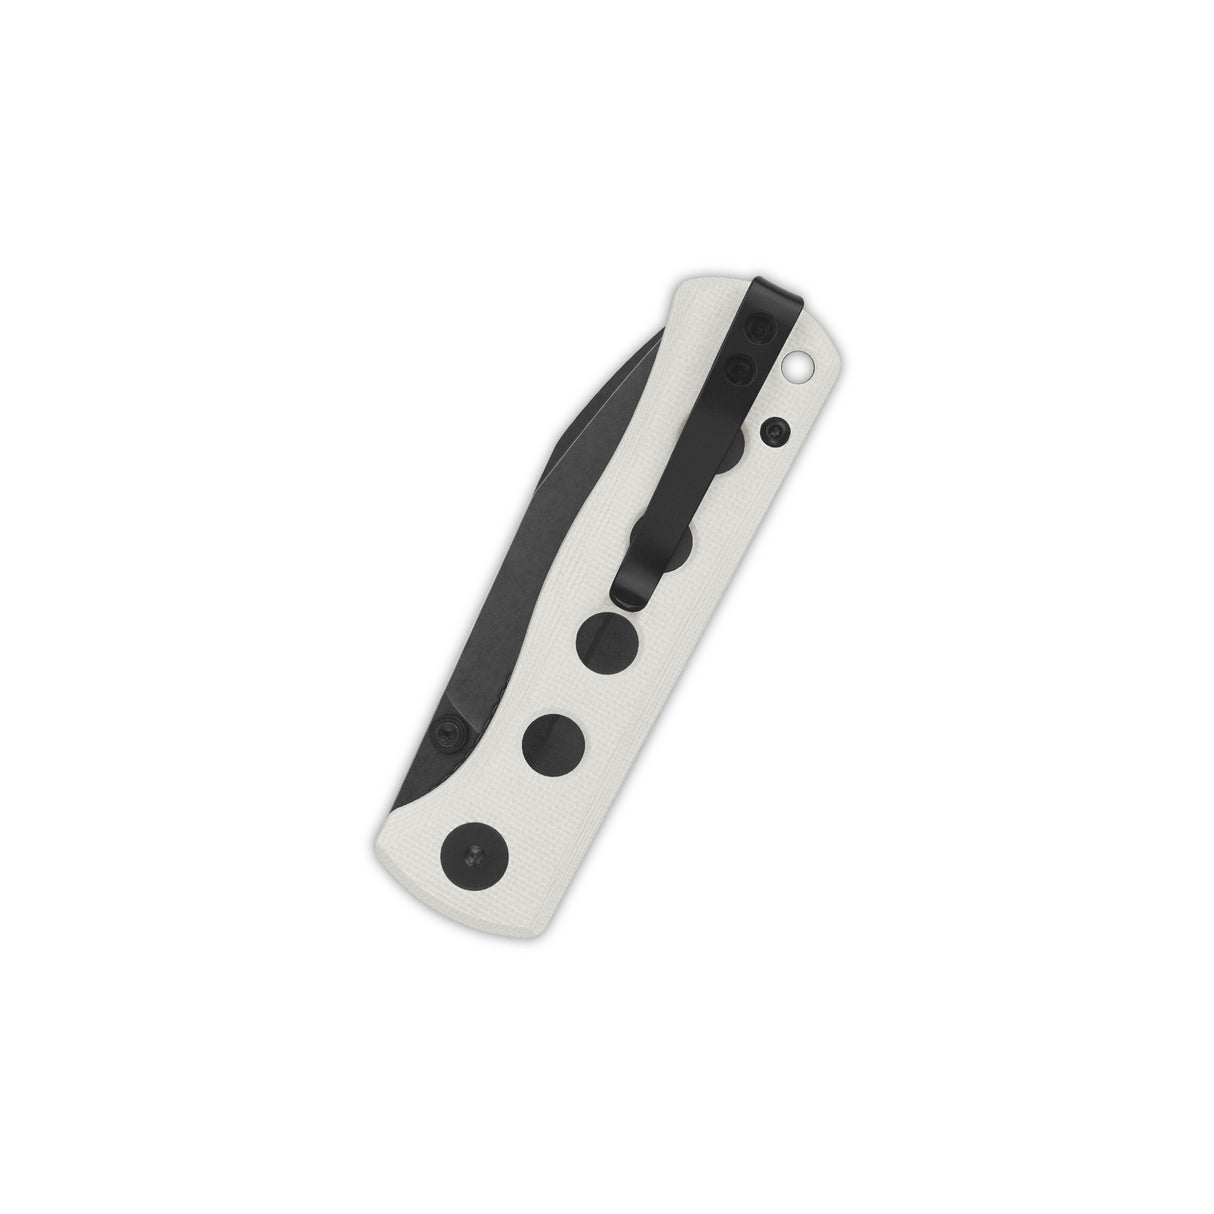 QSP Canary Folder Liner Lock Pocket Knife 14C28N Blade White G10 Handle